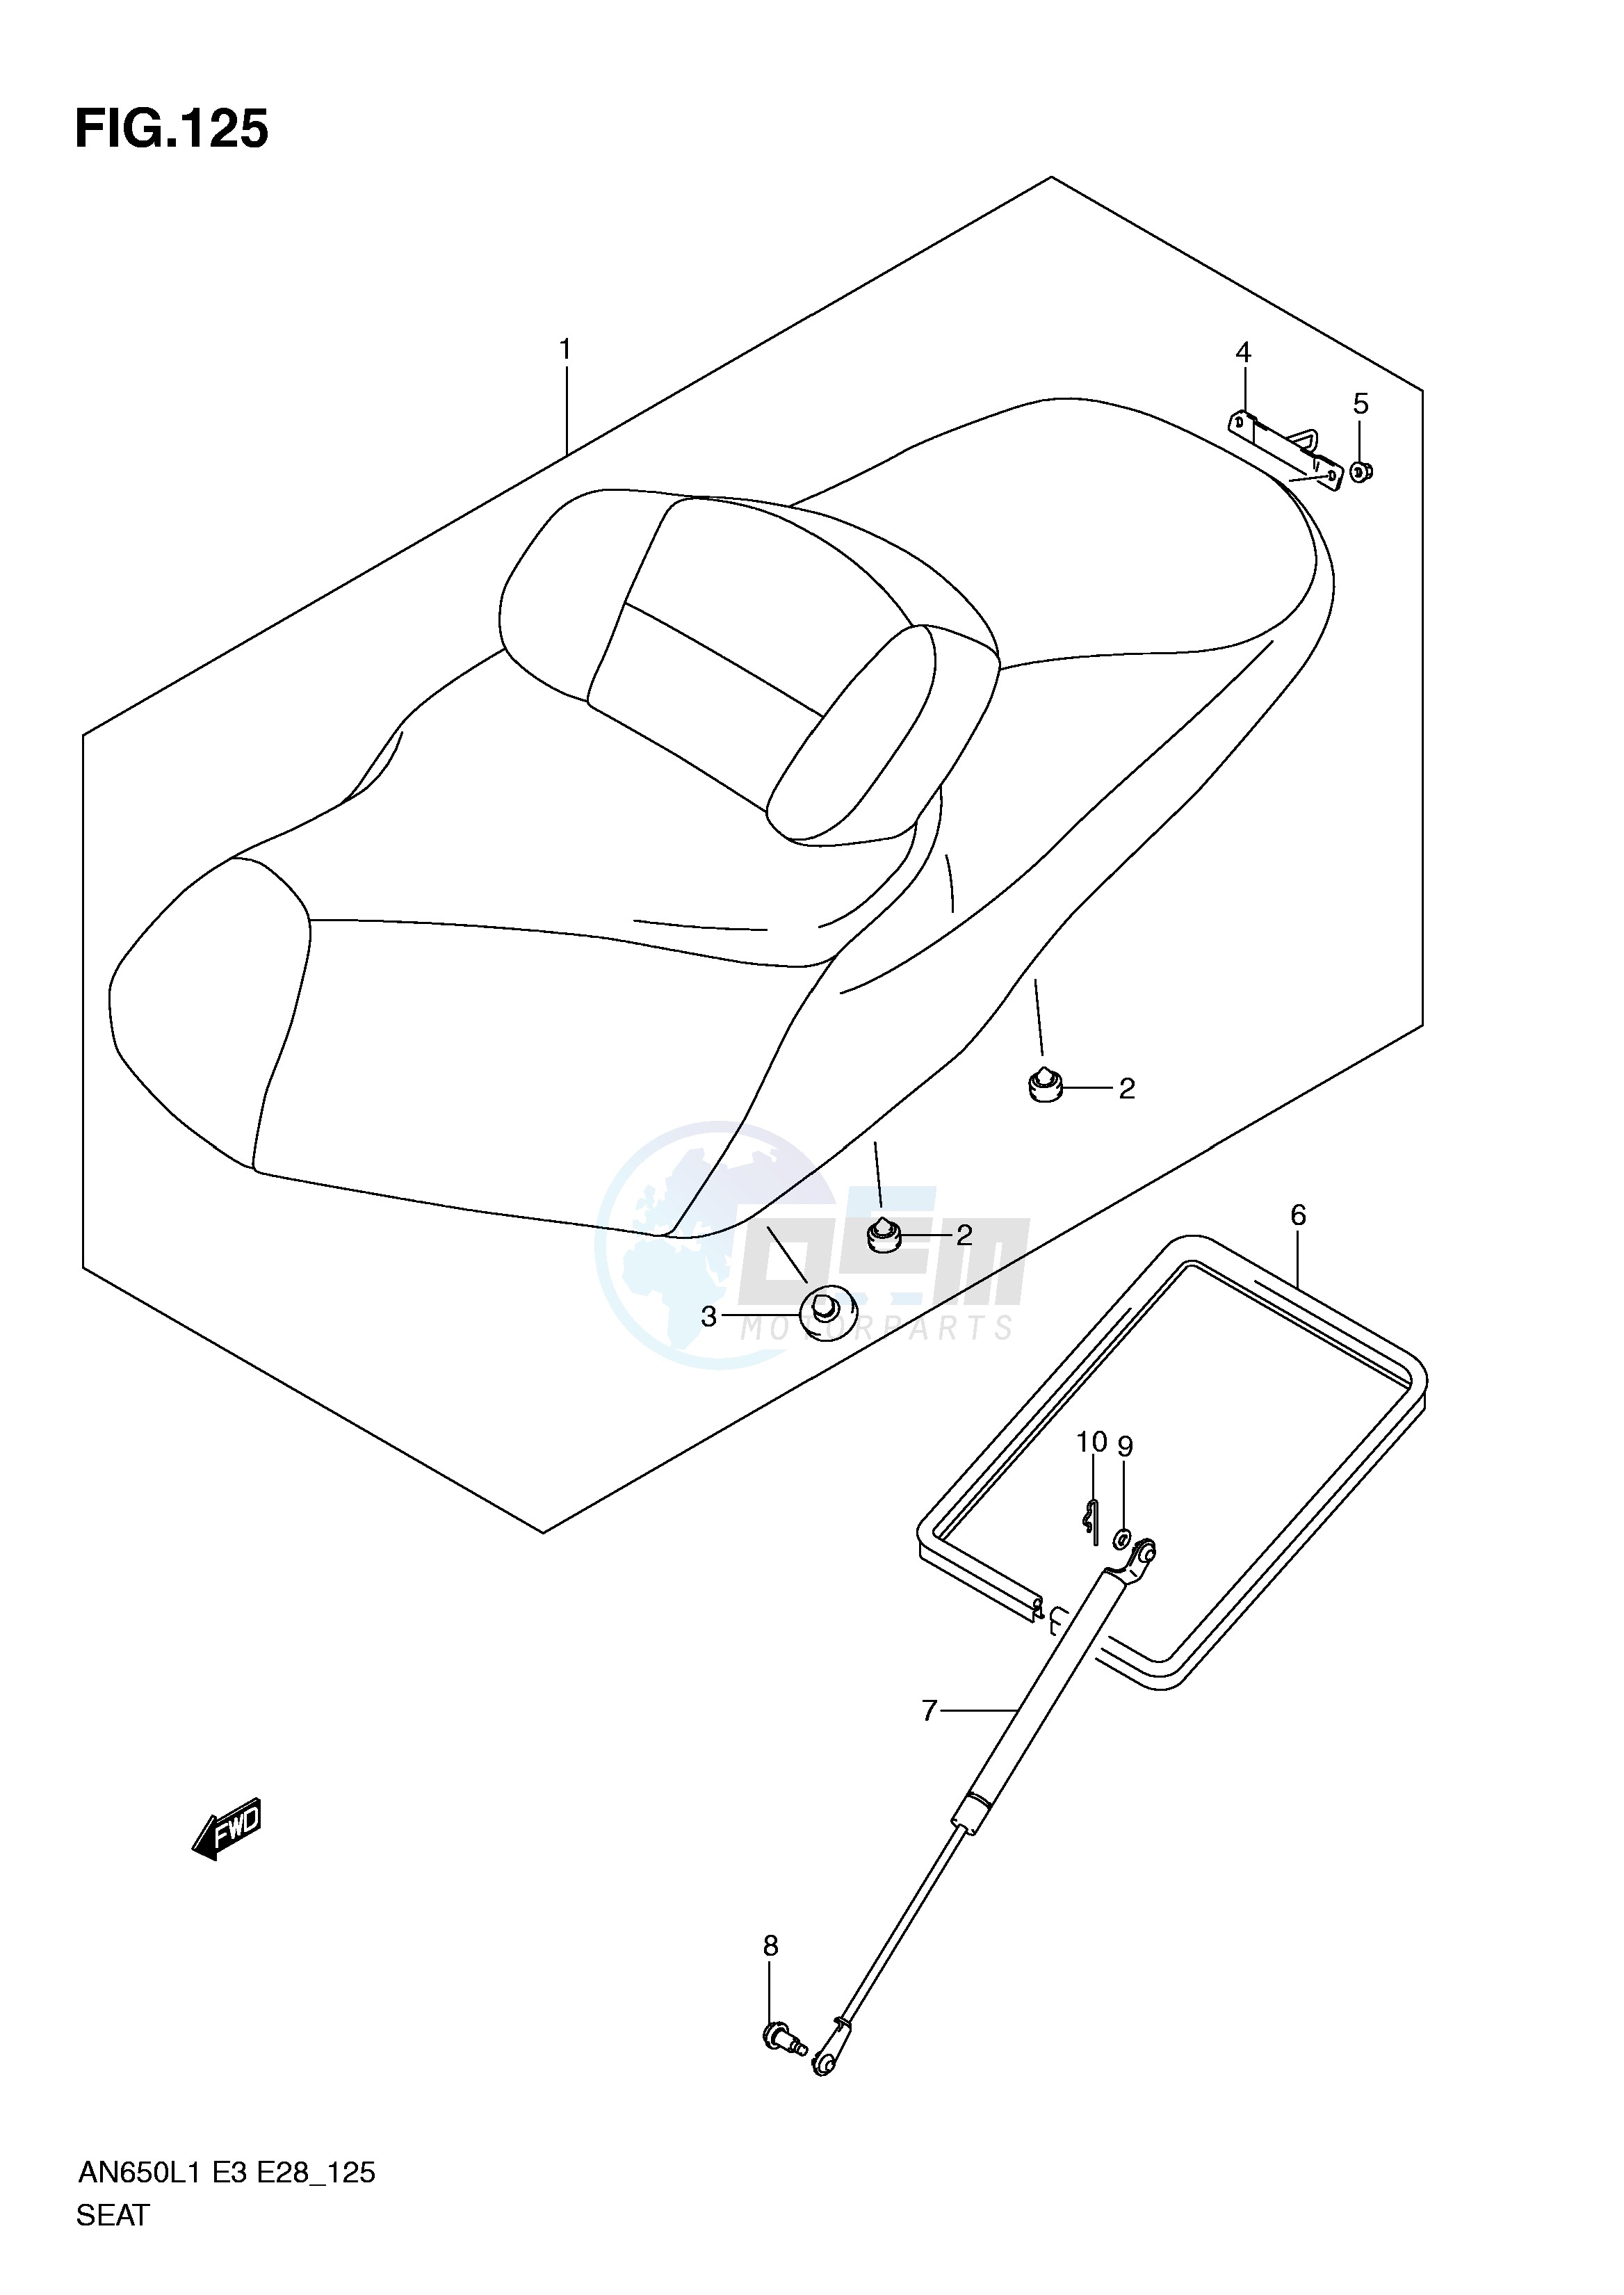 SEAT (AN650L1 E3) blueprint